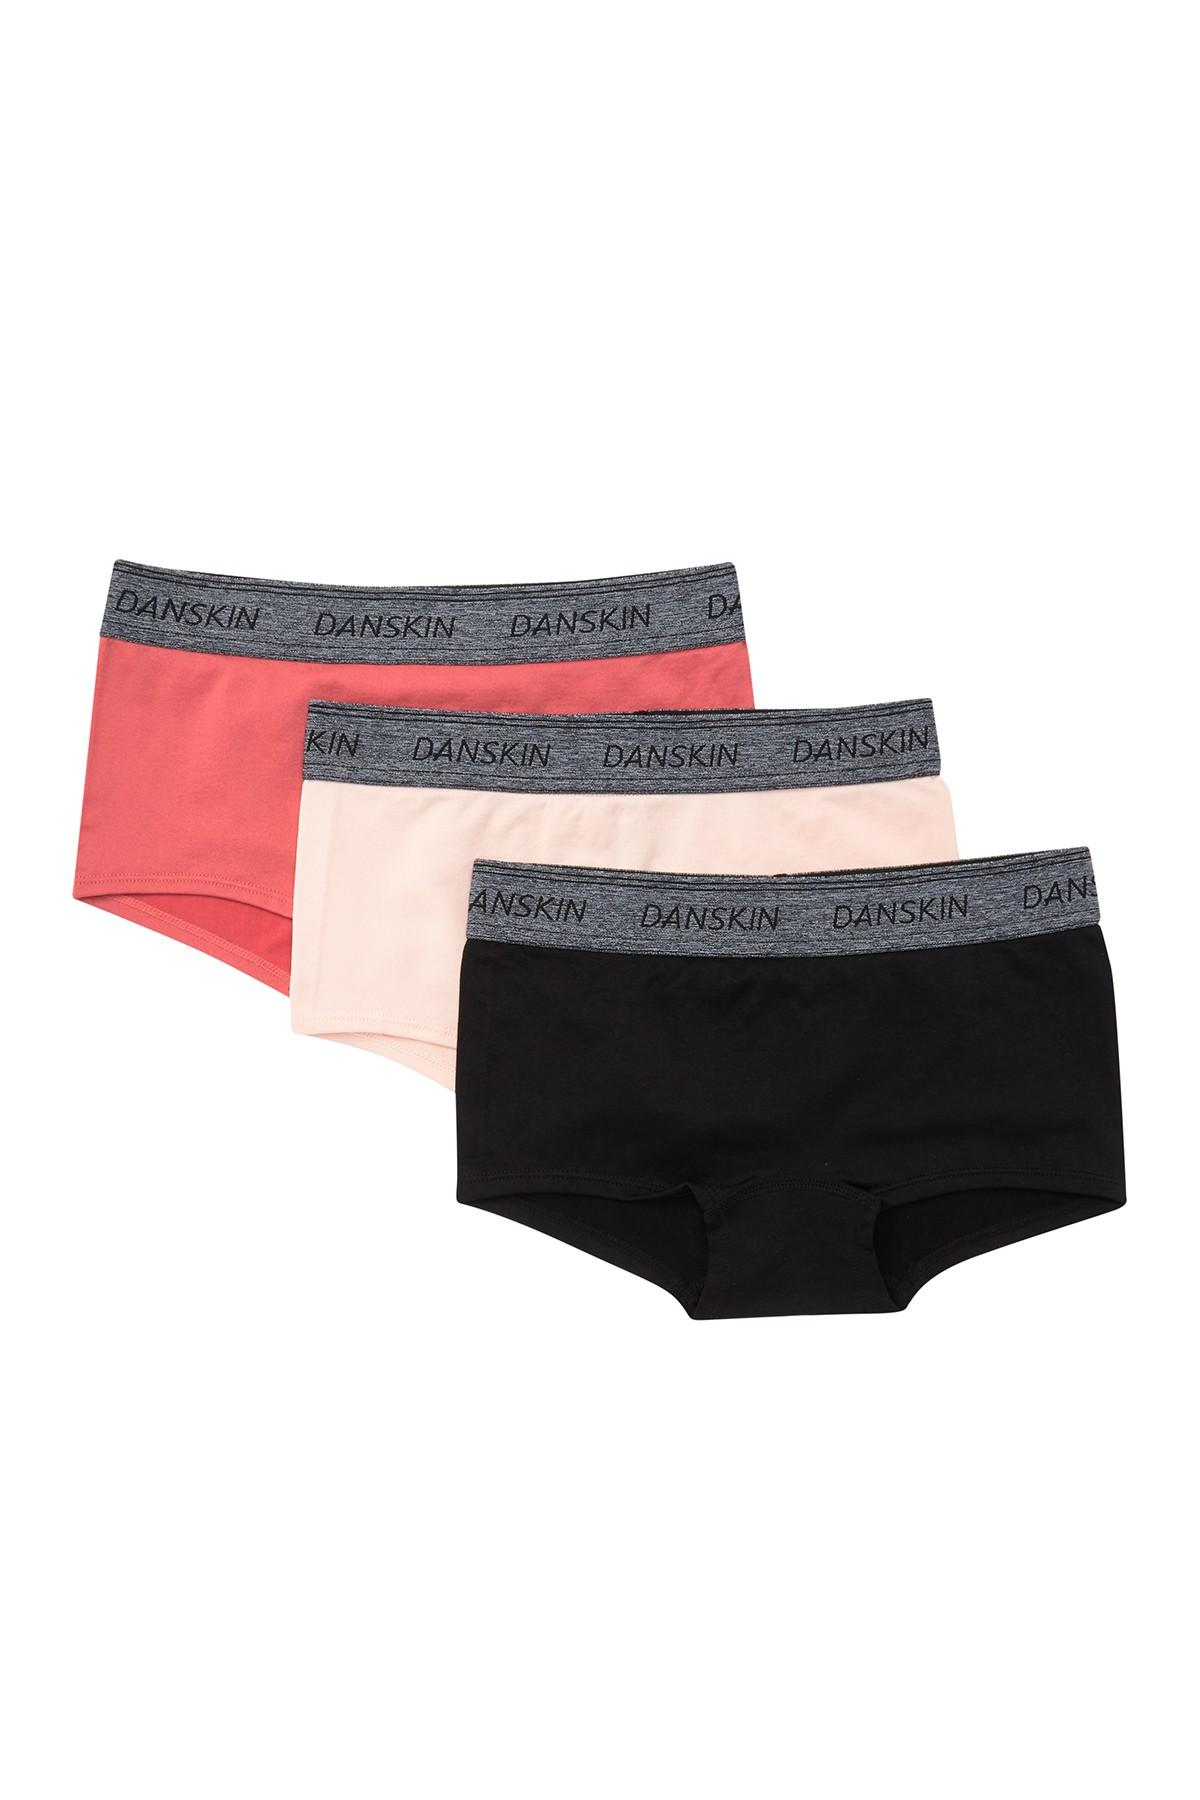 https://cdna.lystit.com/photos/nordstromrack/ae55221d/danskin-PINKBLACK-Boyshort-Underwear-Set-Of-3.jpeg